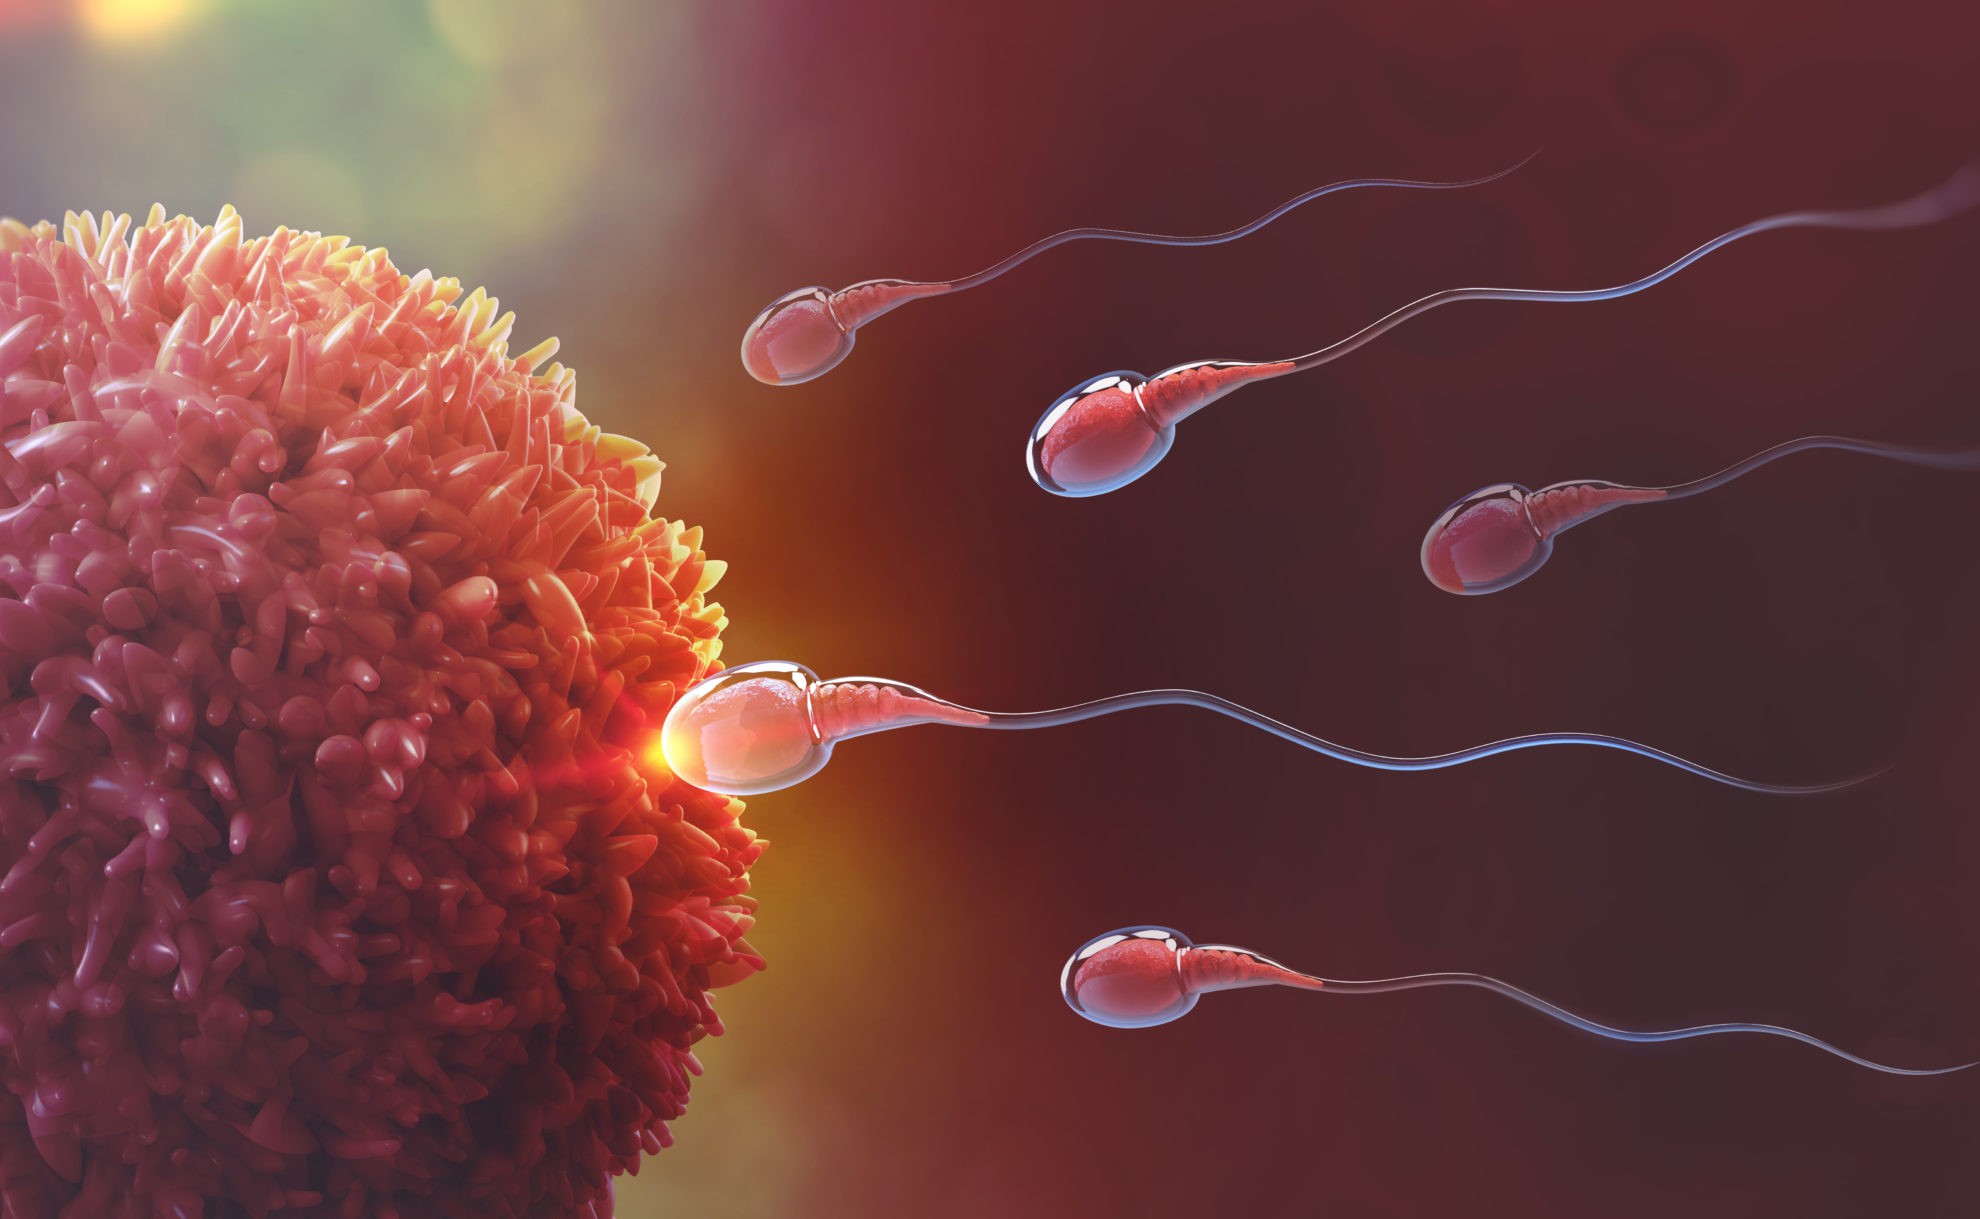 сперма во влагалище у детей фото 17